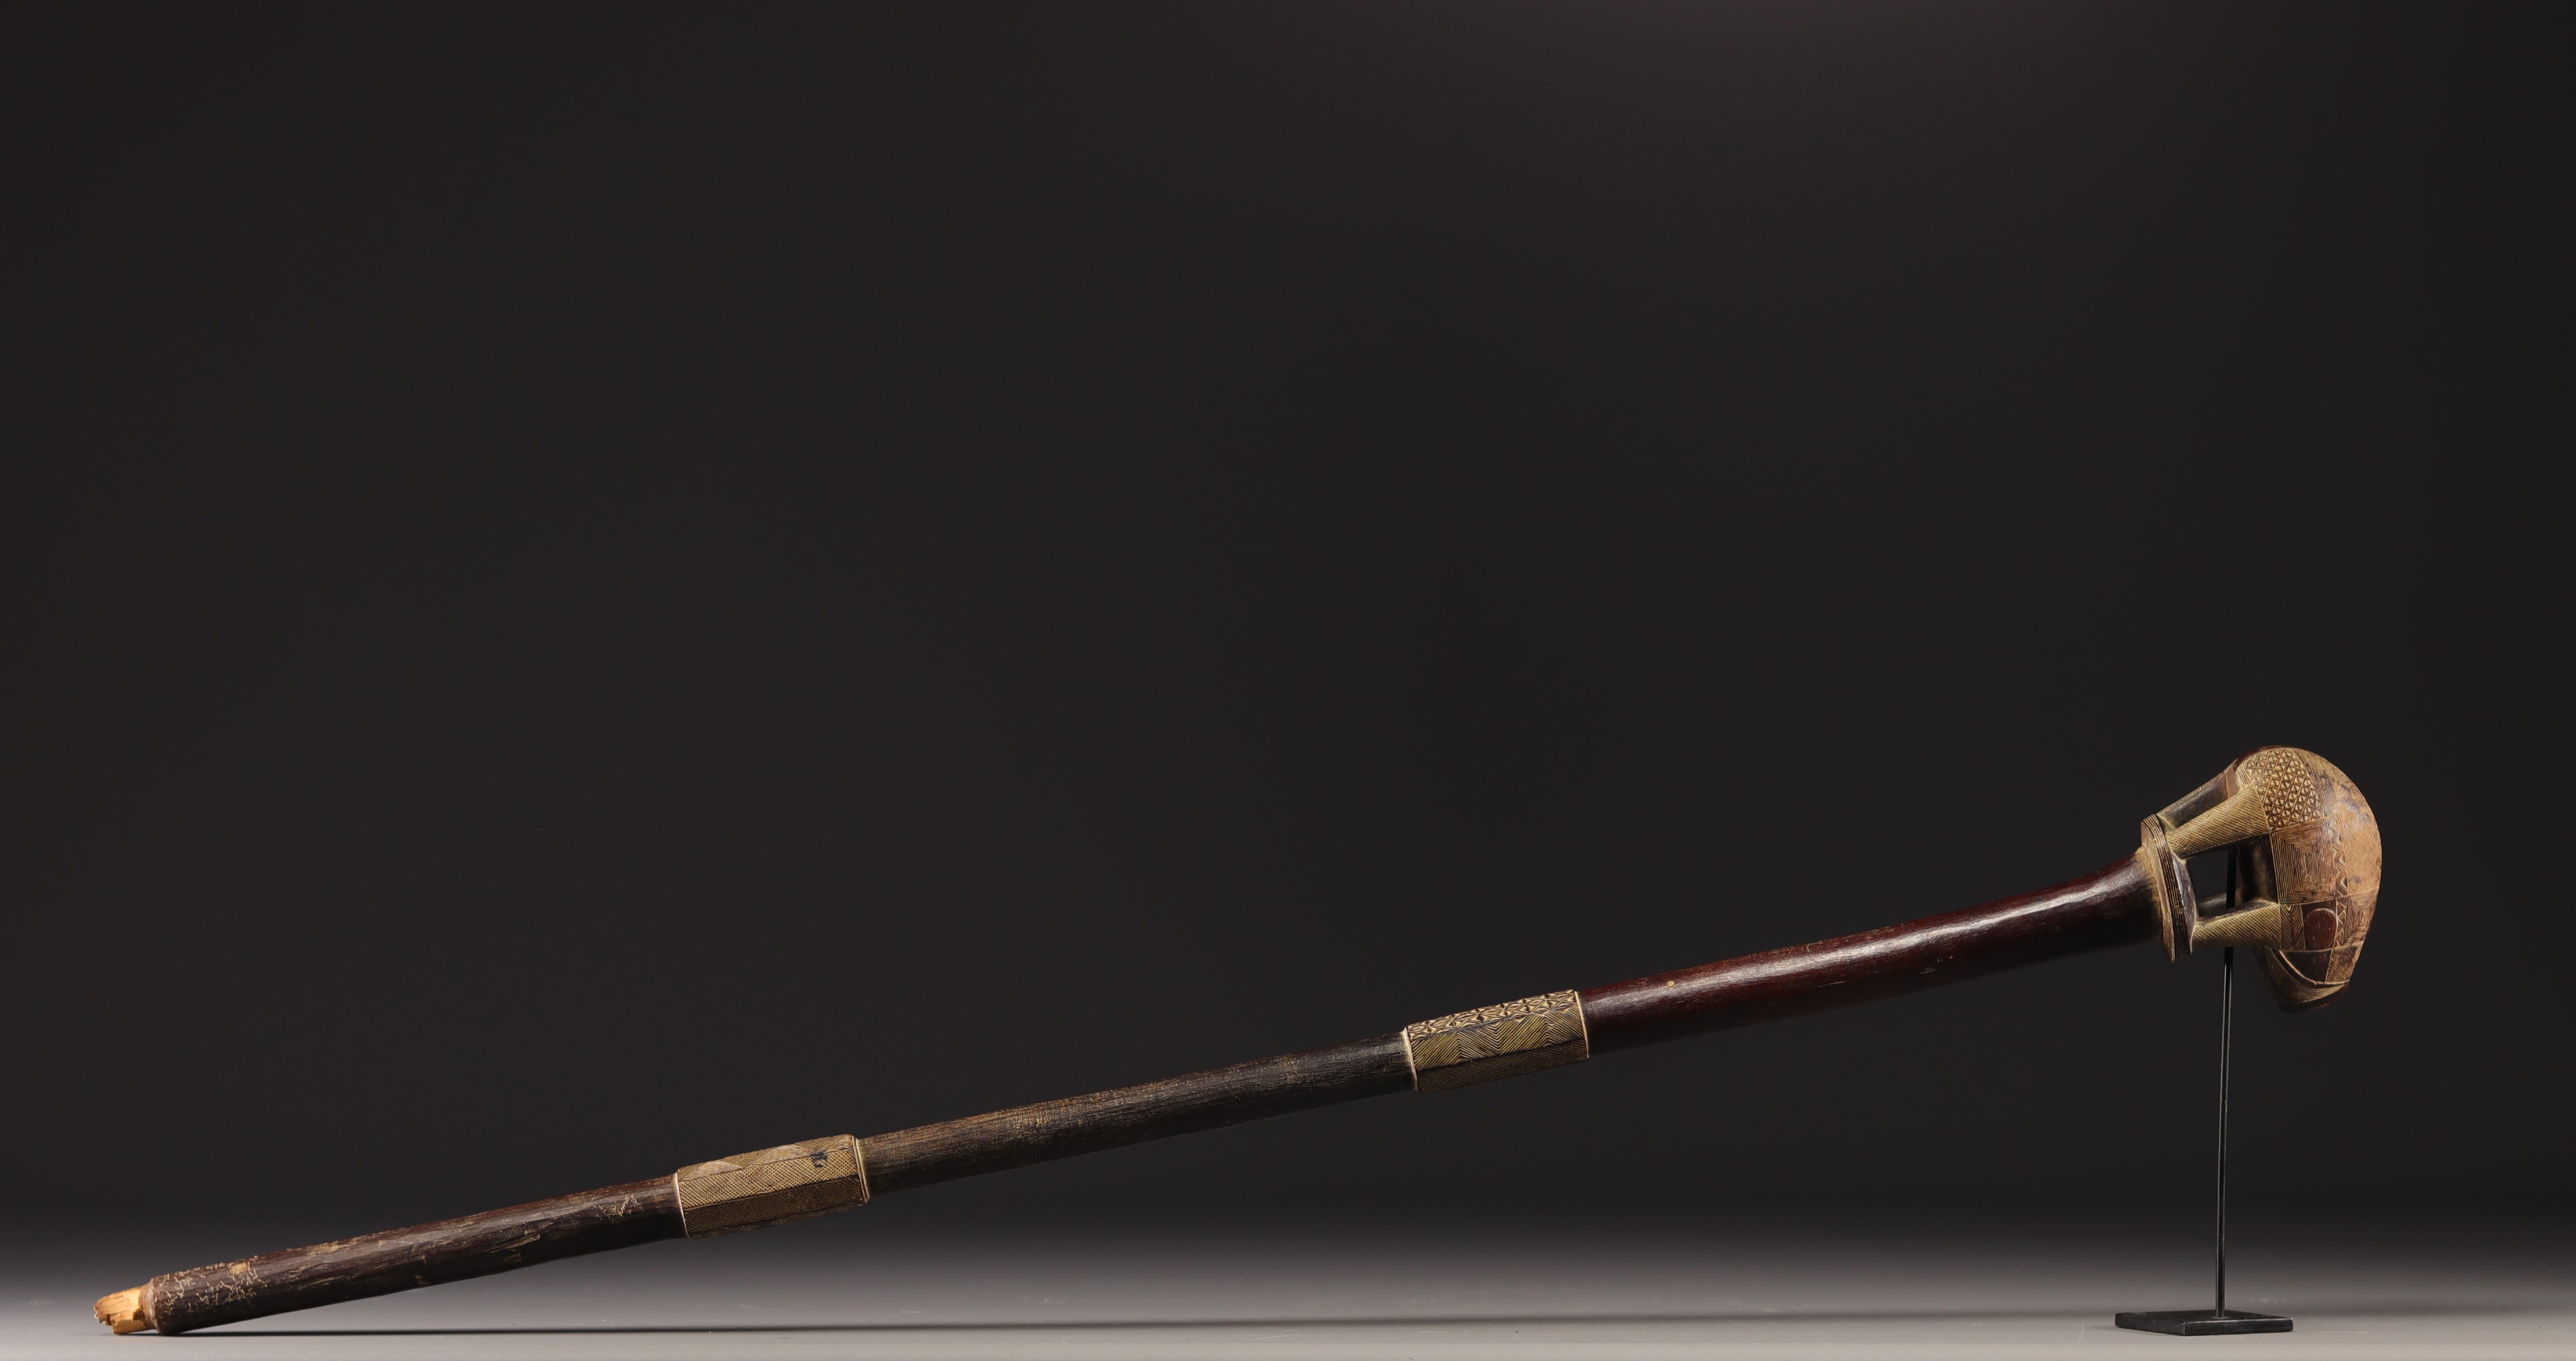 Baule sceptre / staff ? - Ivory Coast